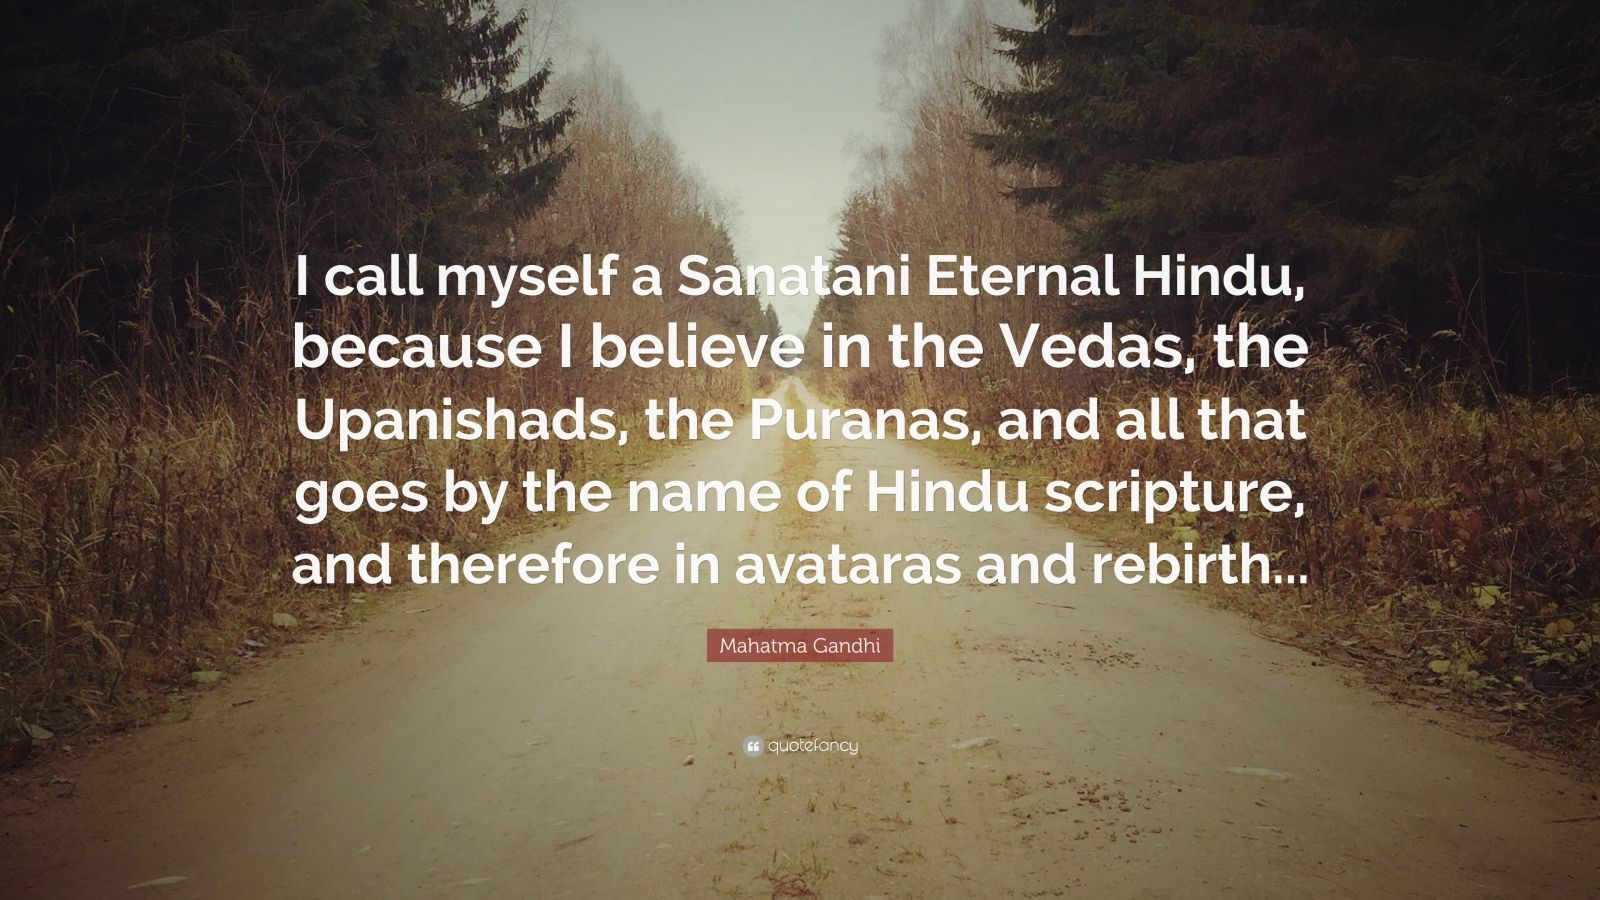 Mahatma Gandhi Quote: “I call myself a Sanatani Eternal Hindu, because